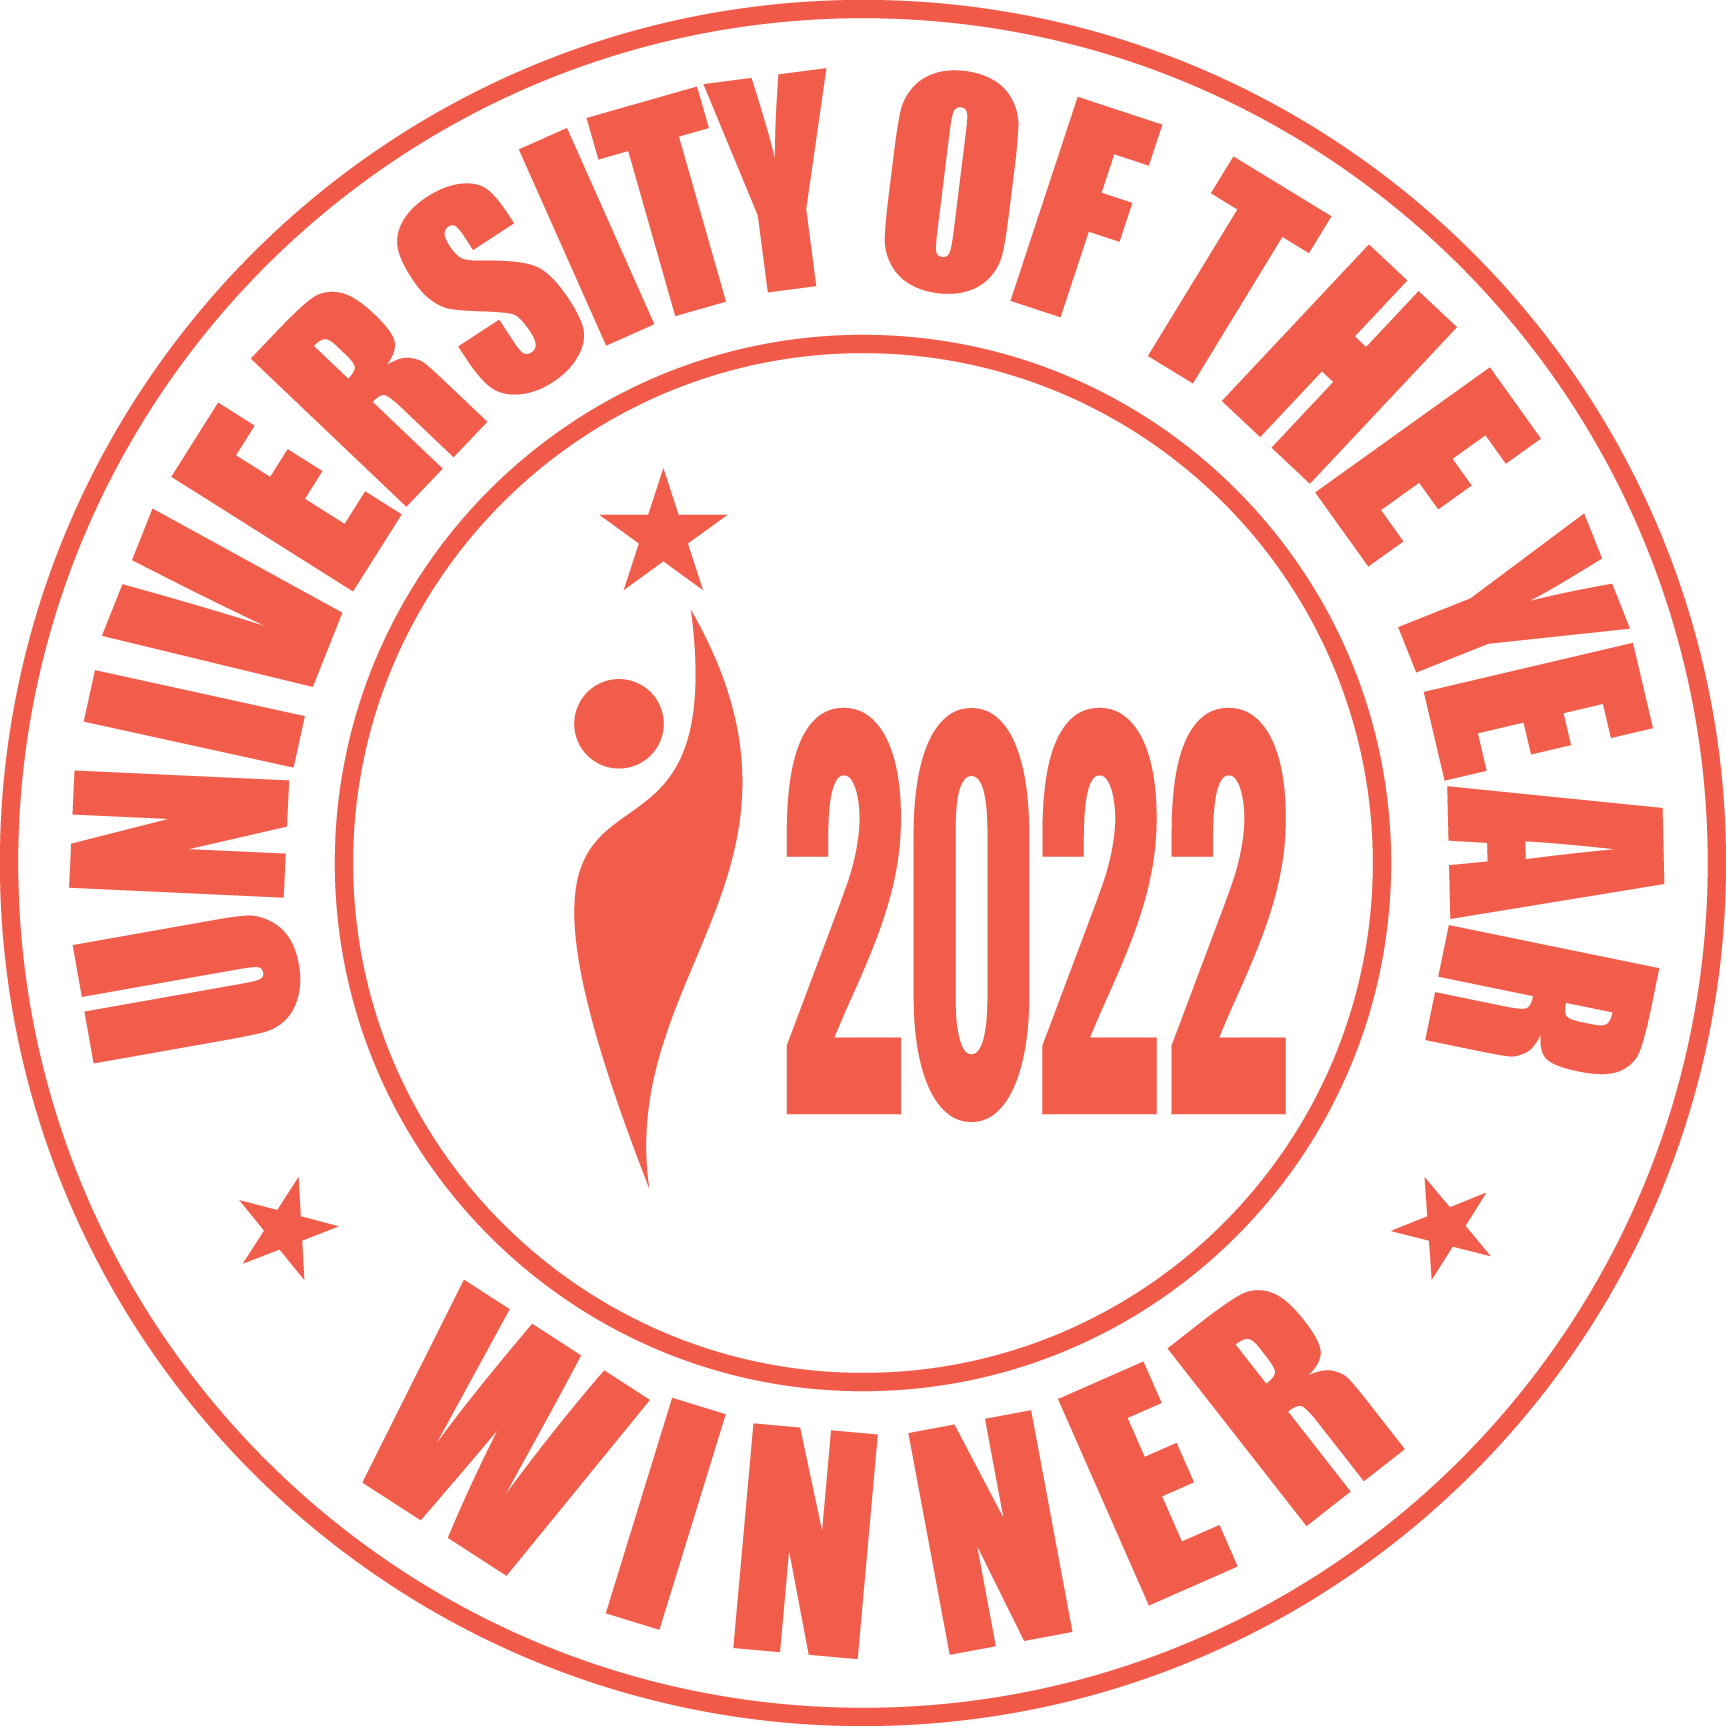 Emblem University of the year 2022